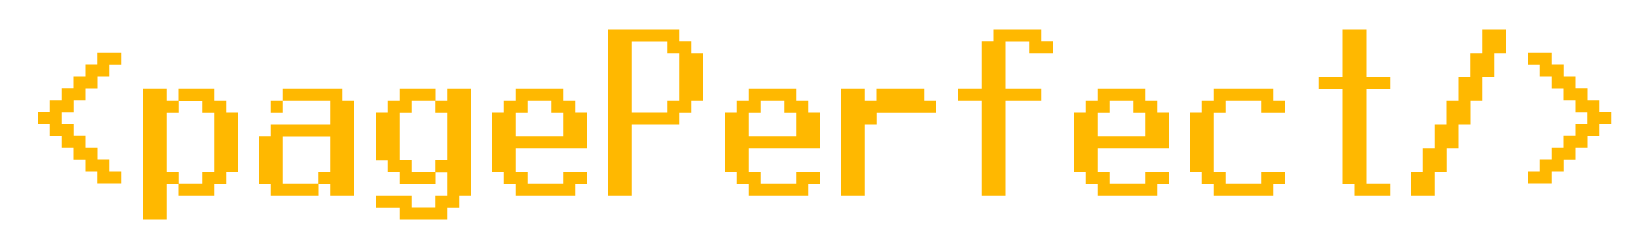 pagePerfect logo